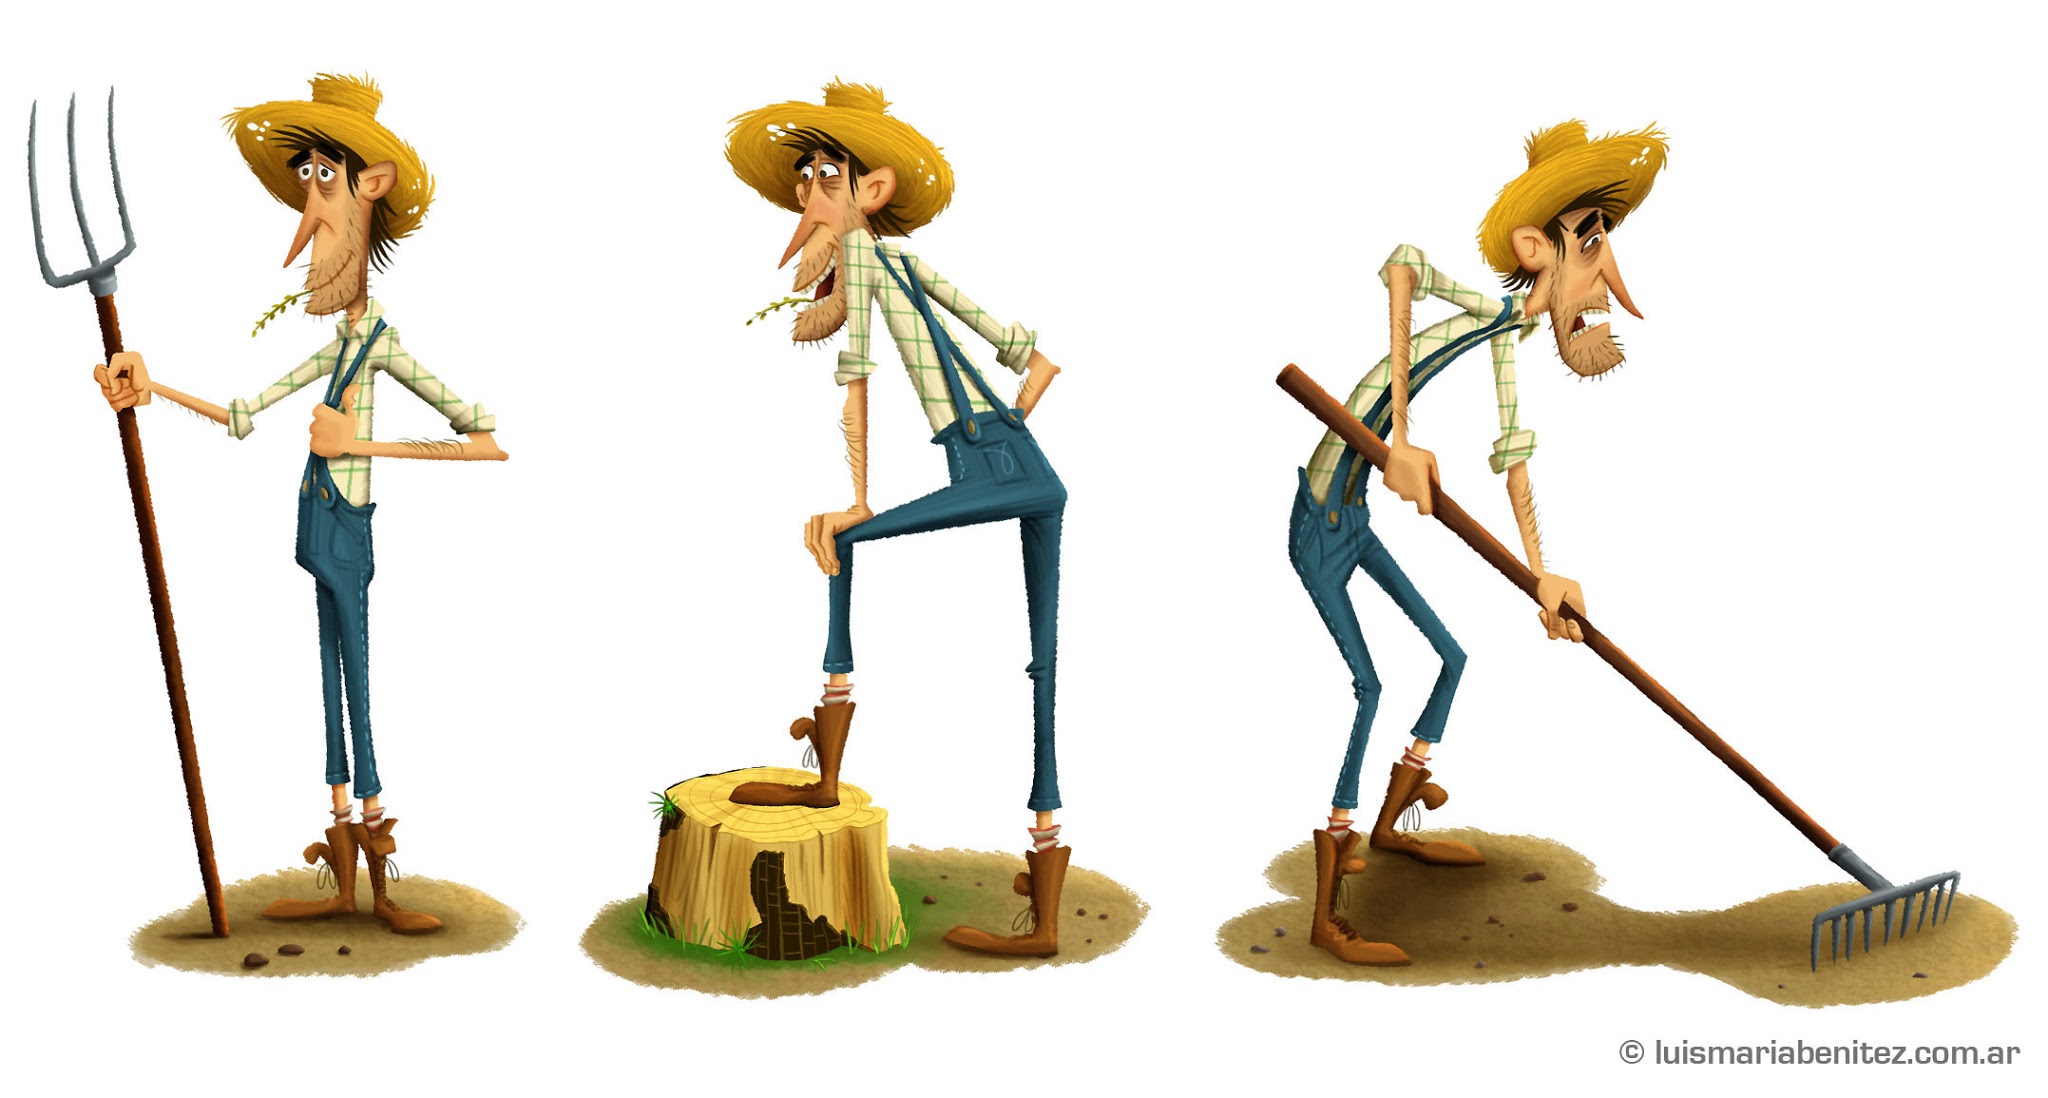 Farmer illustration by Luis María Benítez